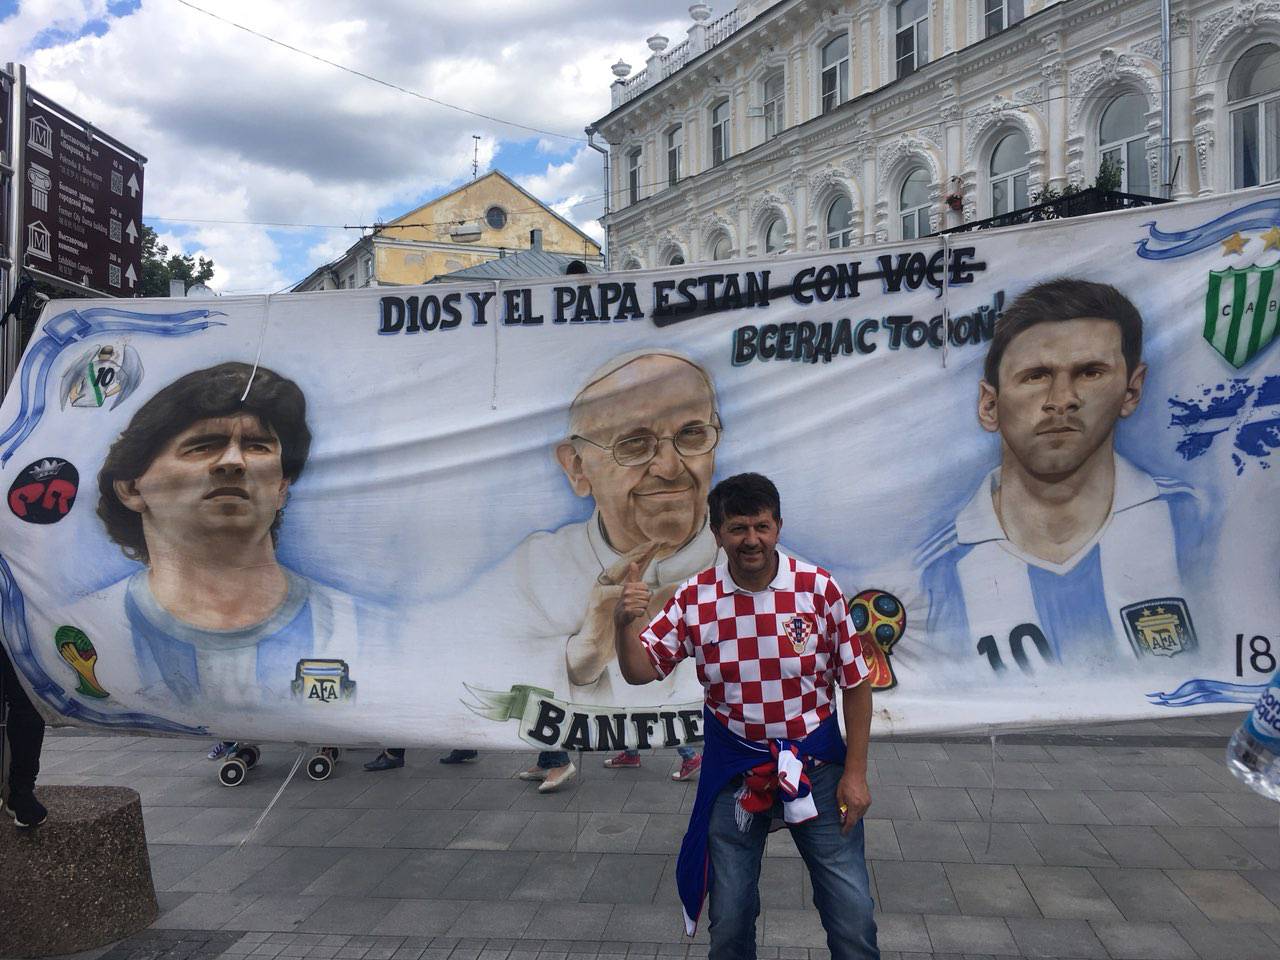 Gaučos se moli uoči Hrvatske: Diego, Papa i Leo, pomagajte!